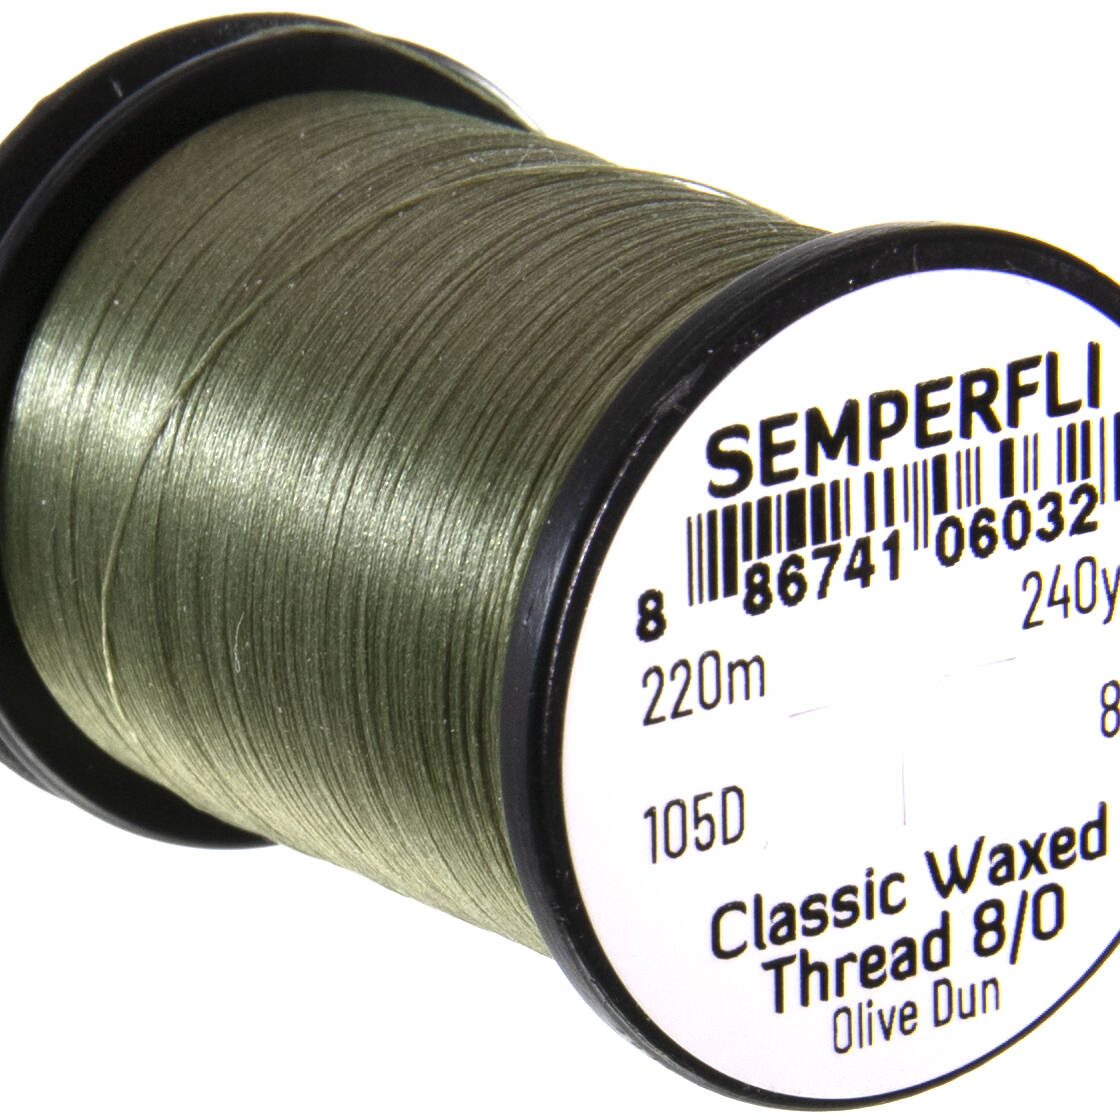 Semperfli Classic Waxed Thread 8/0 240 Yards Olive Dun